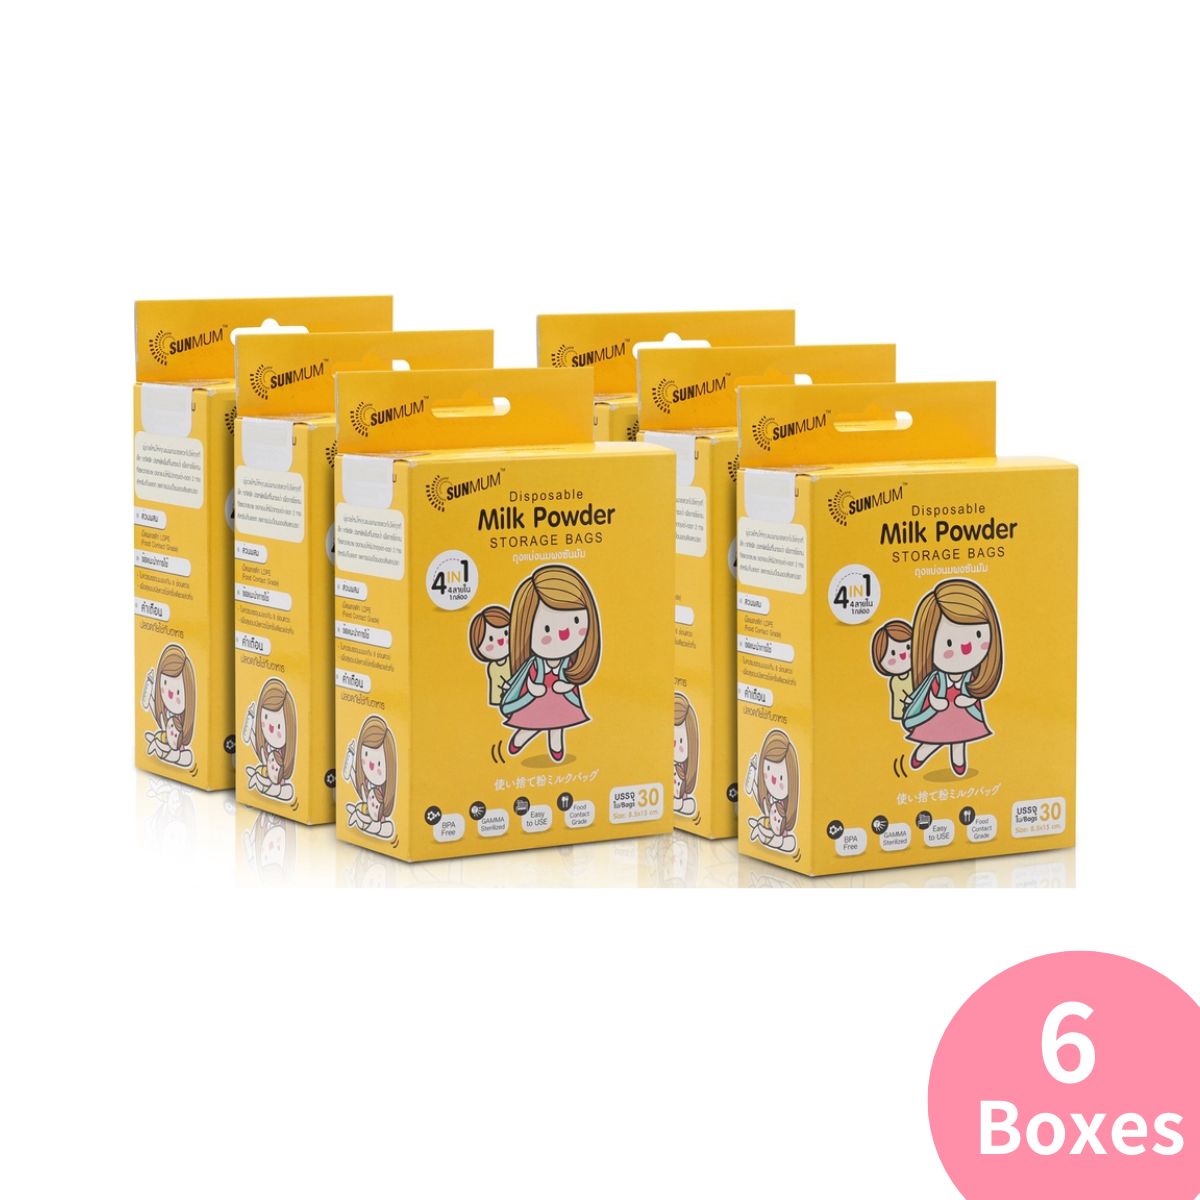 6 Boxes